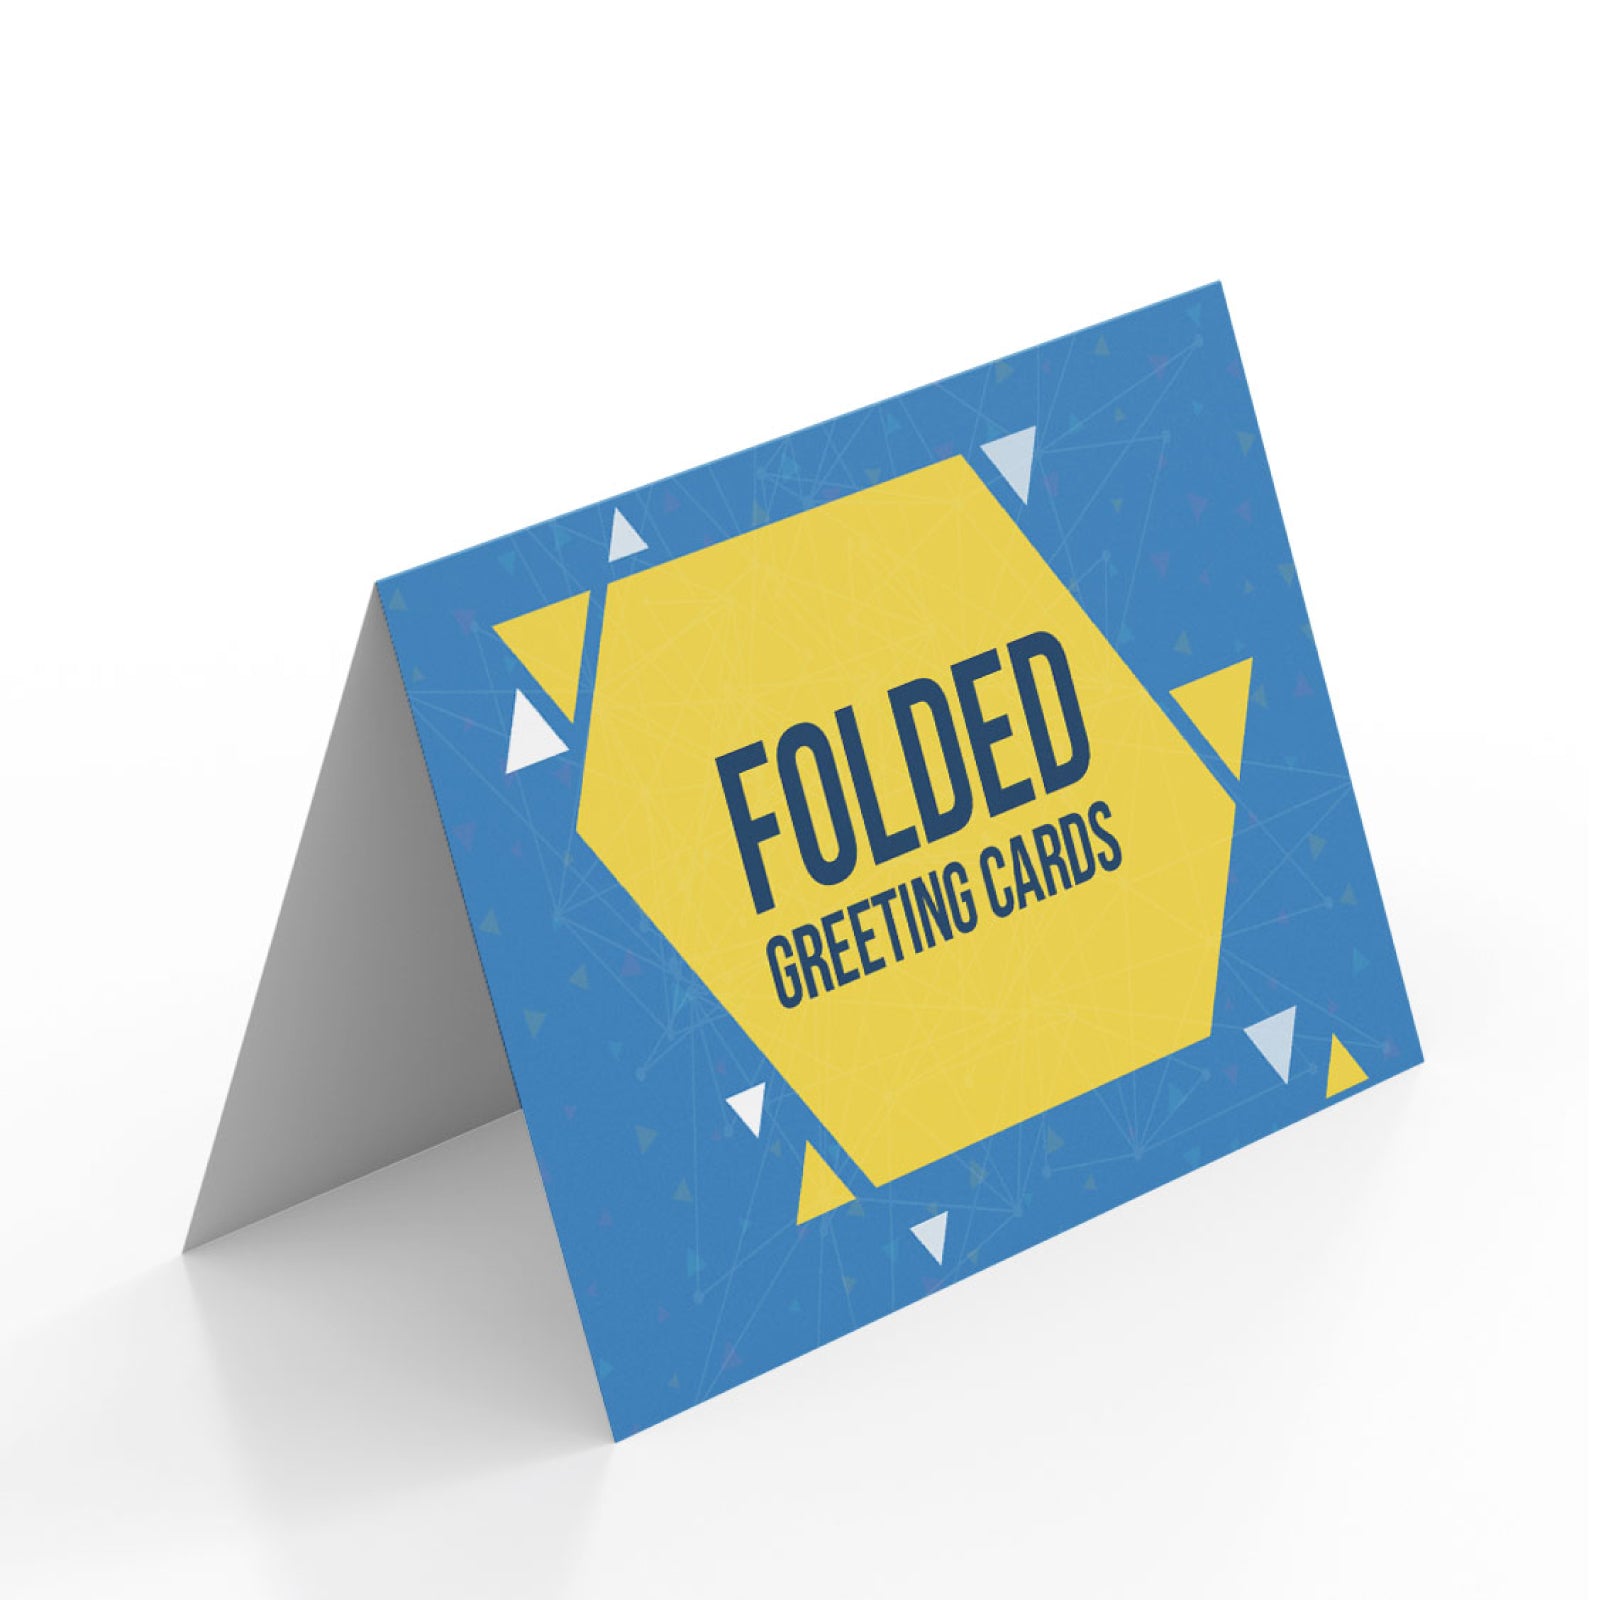 Folded Greeting Cards - Greeting Card Printing 